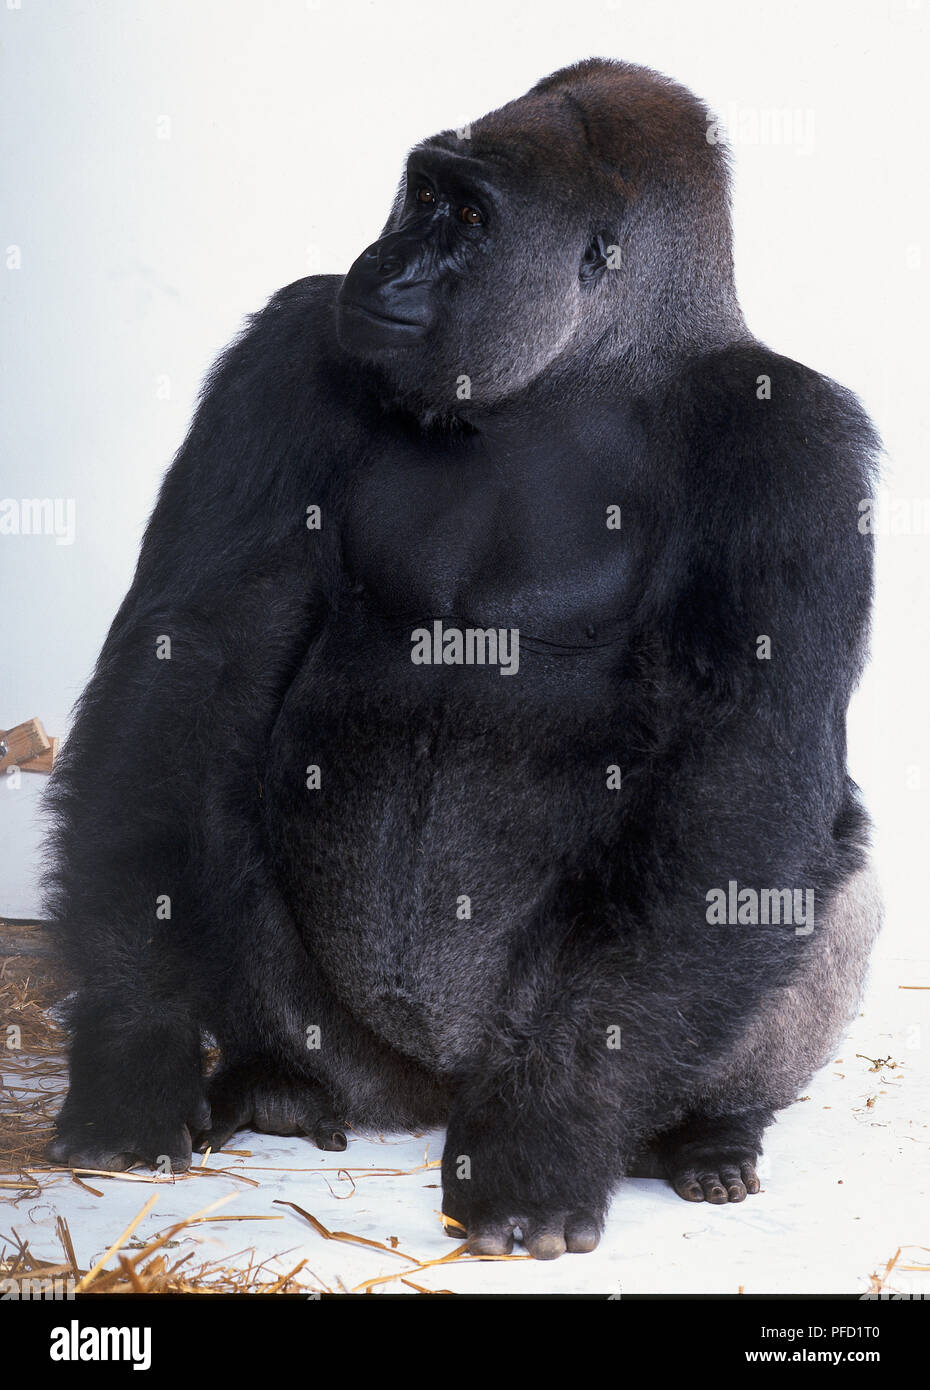 Gorilla Silverback seduto Foto Stock